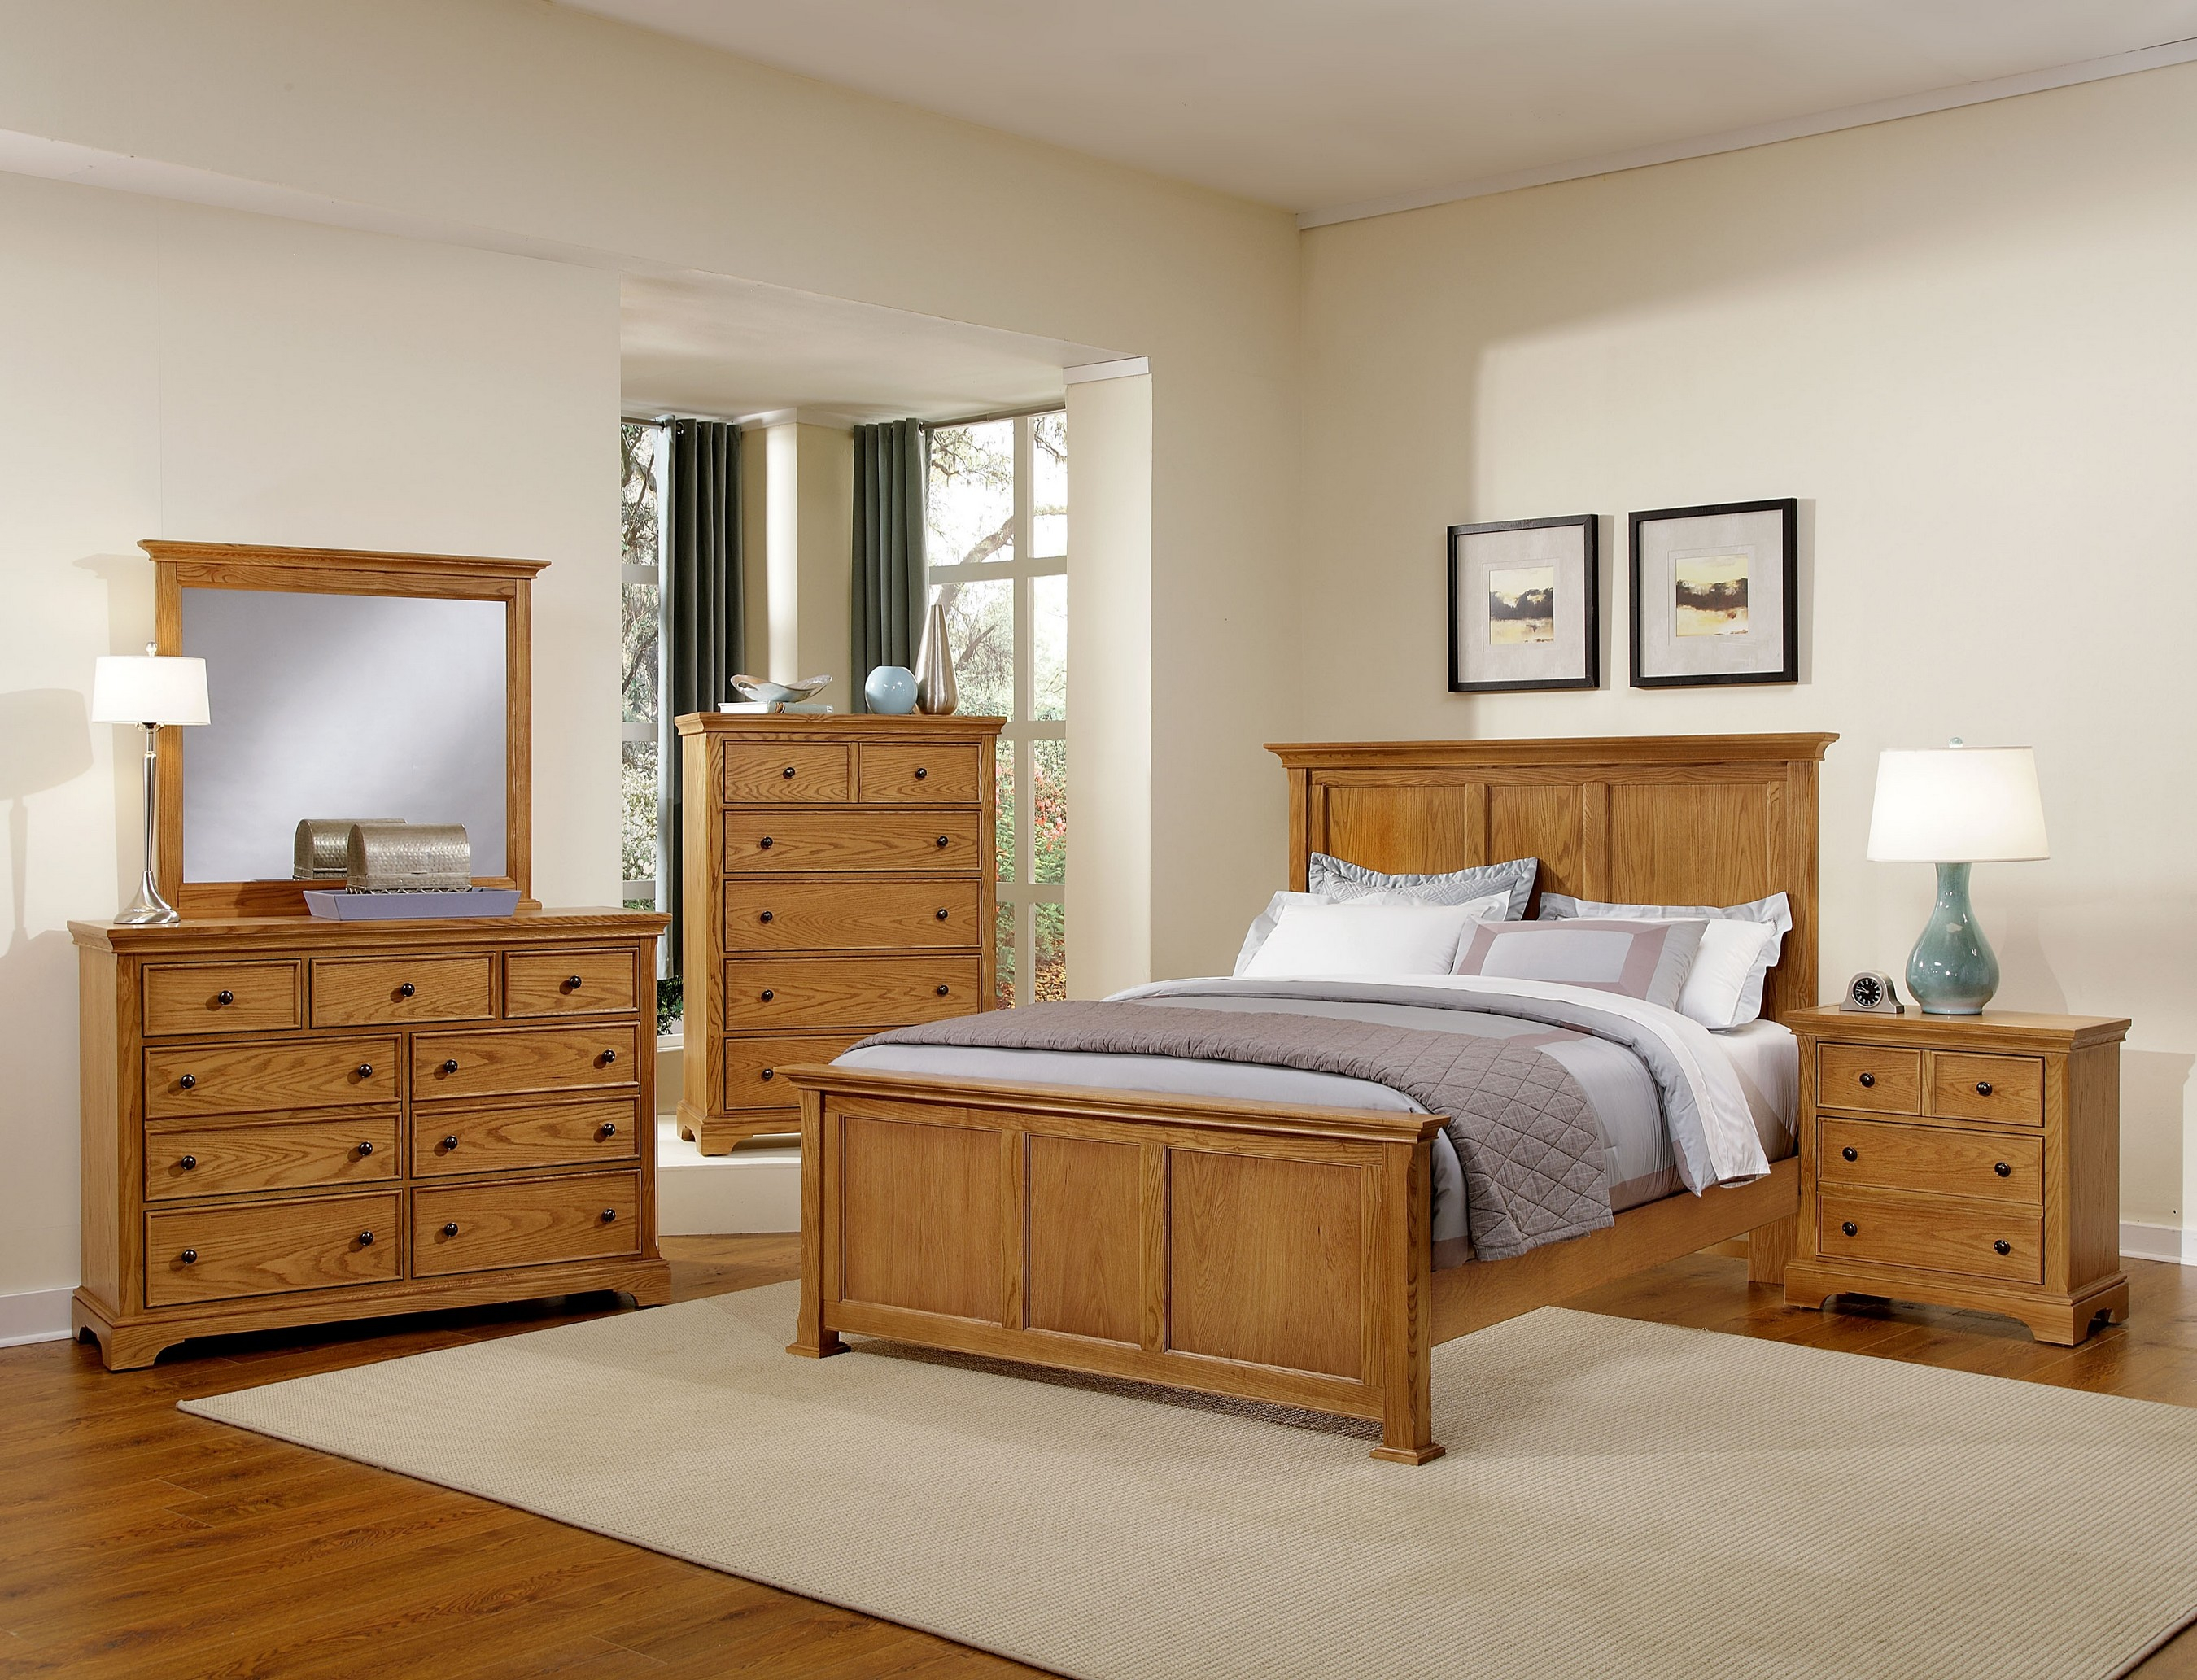 Plans Simple Latest Bedroom Wooden Lanka Oak Furniture Solid Set regarding size 2700 X 2065